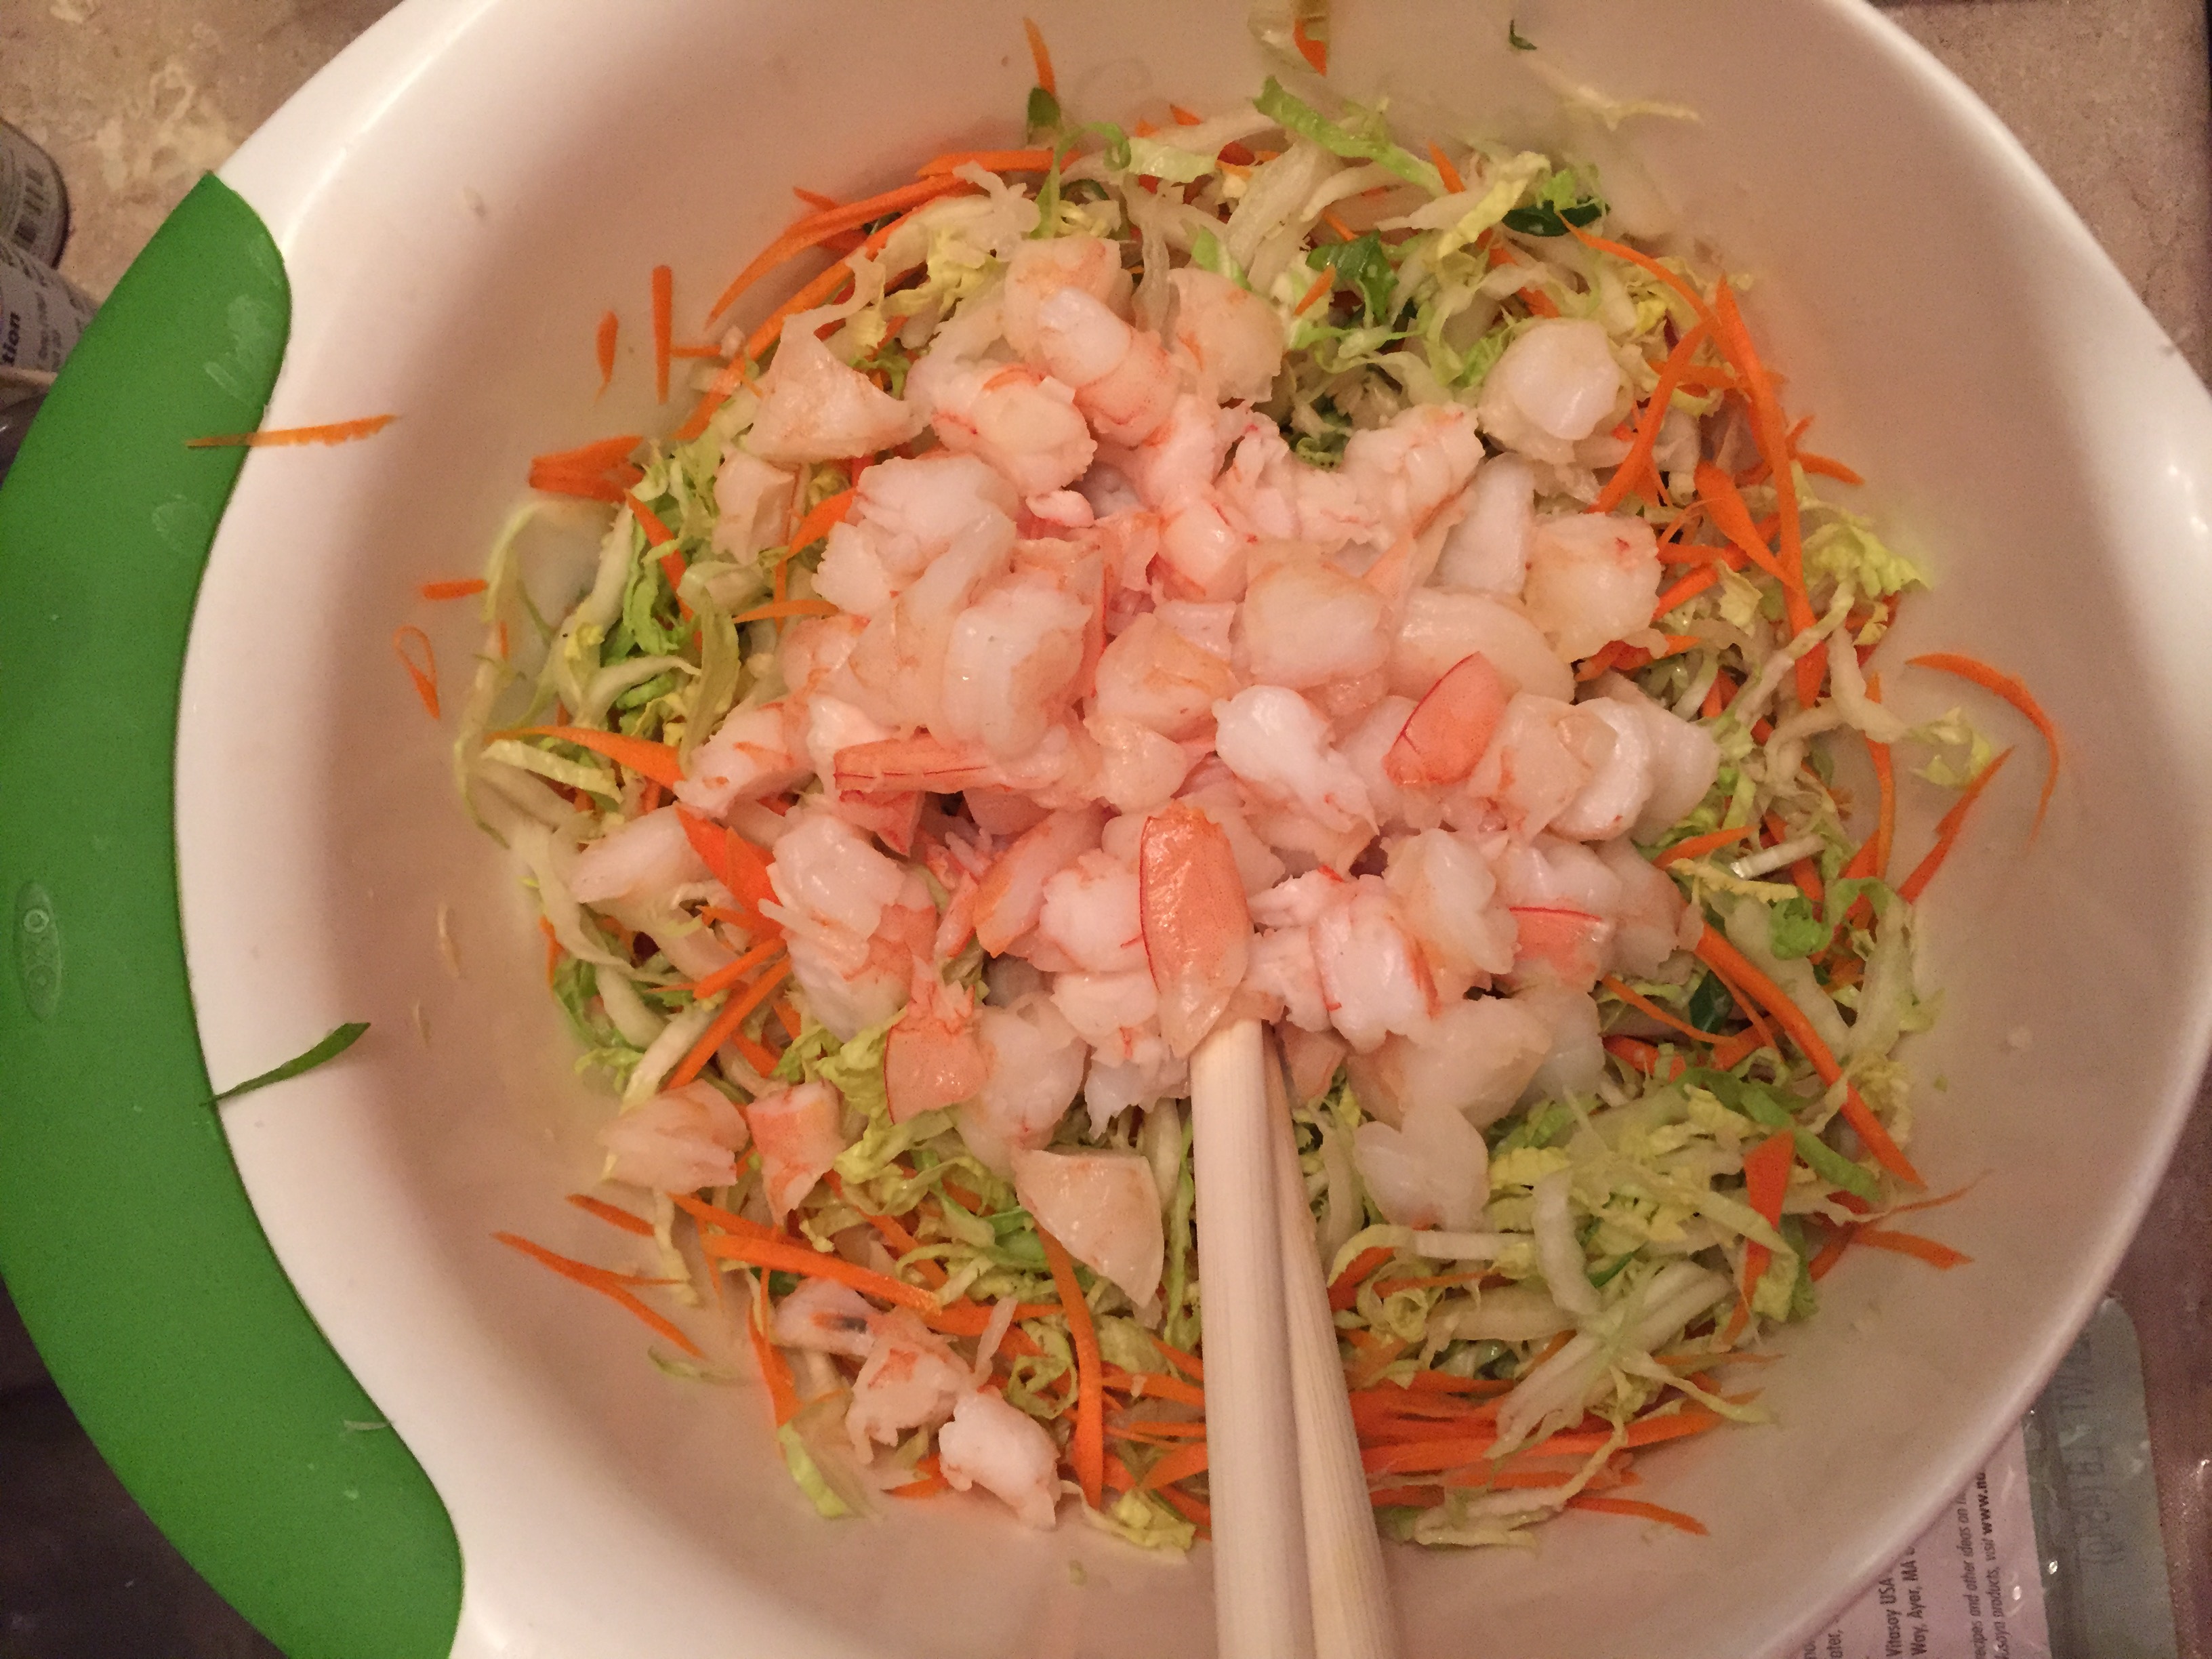 Shrimp and veggies